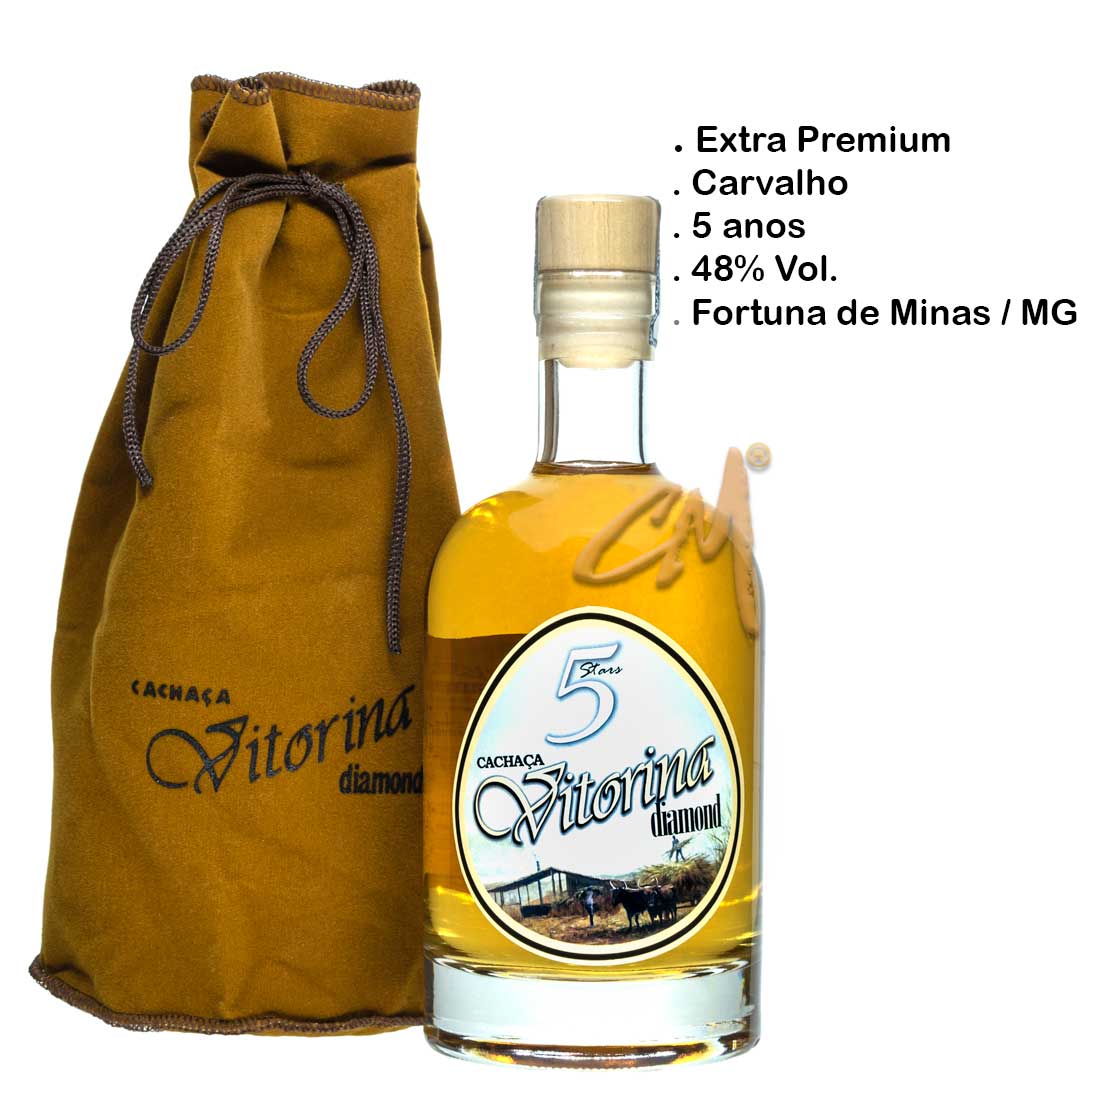 Cachaça Vitorina Diamond 750 ml   (Fortuna de Minas - MG)